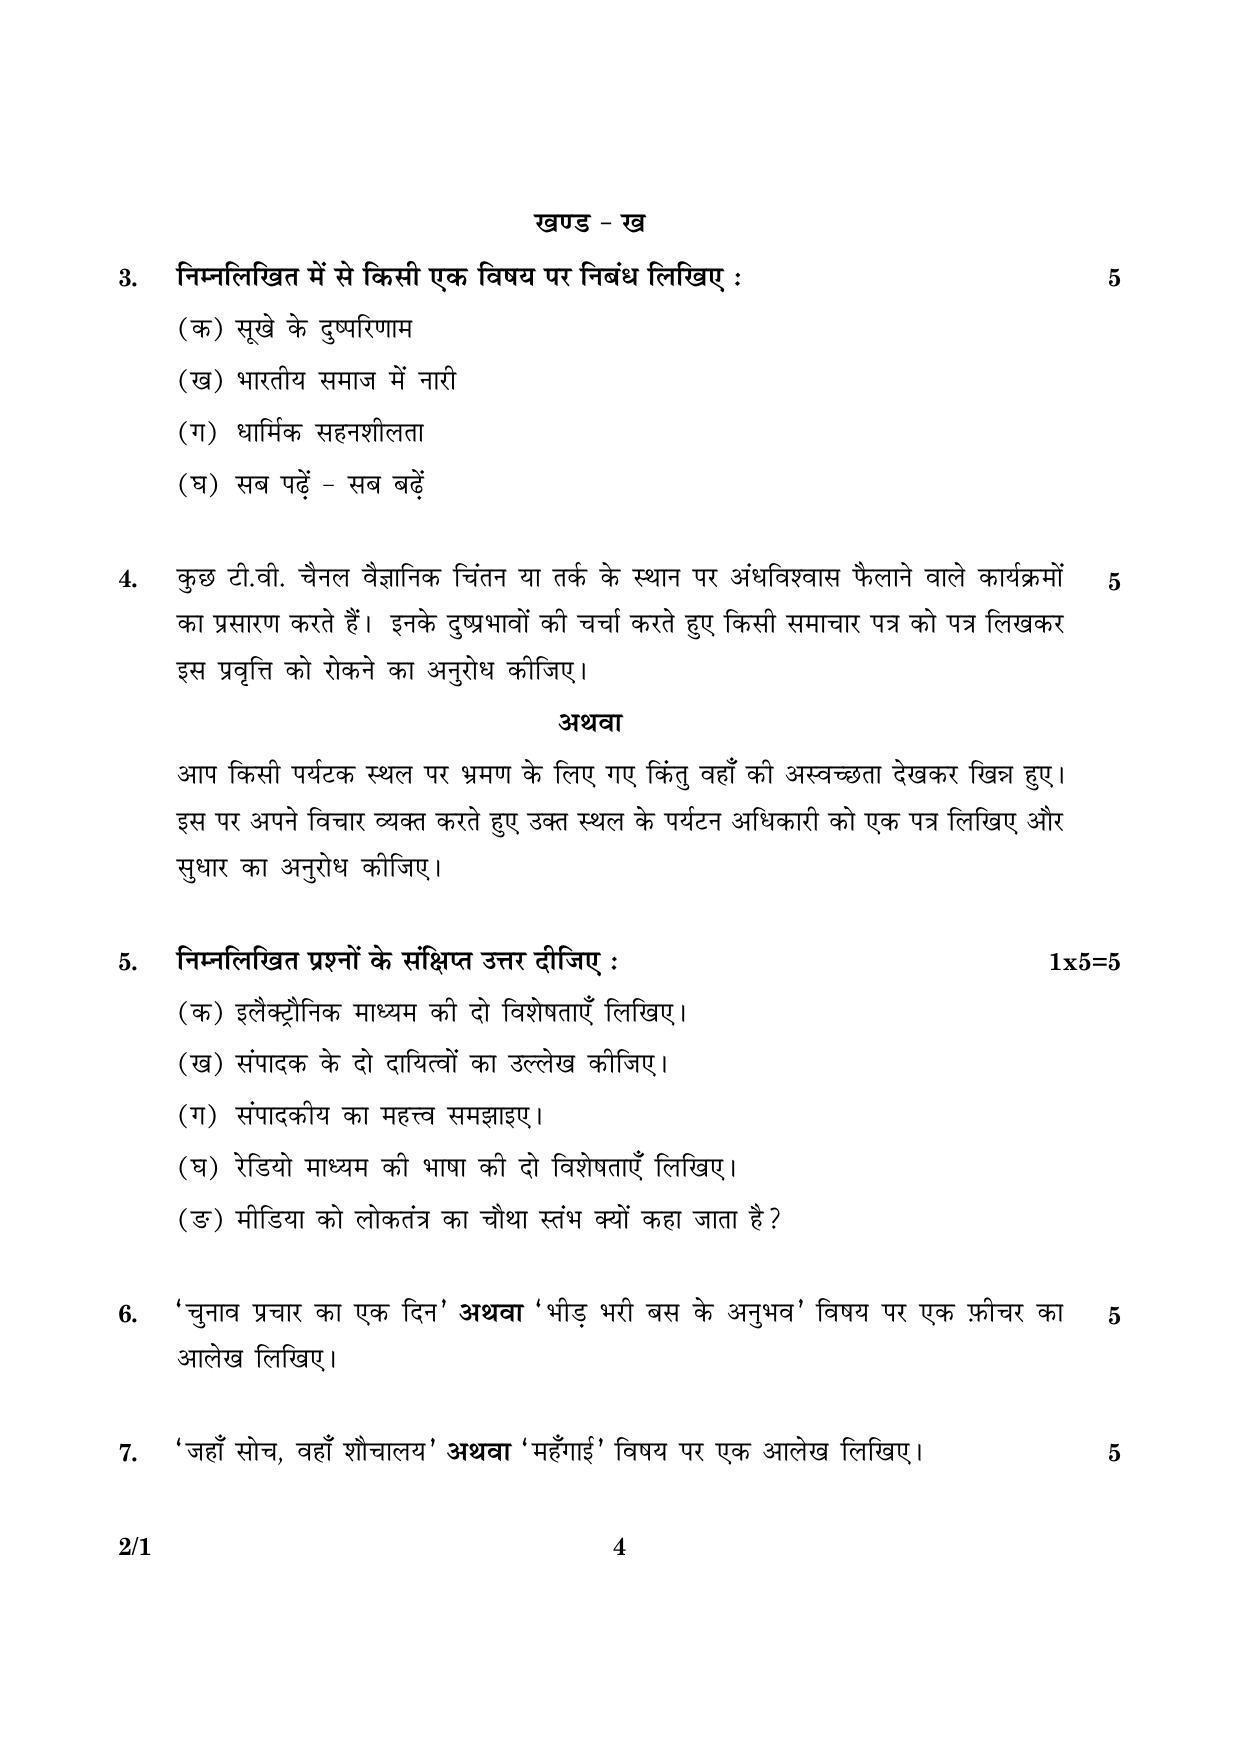 CBSE Class 12 002 Set 1 Hindi (Core) 2016 Question Paper - Page 4